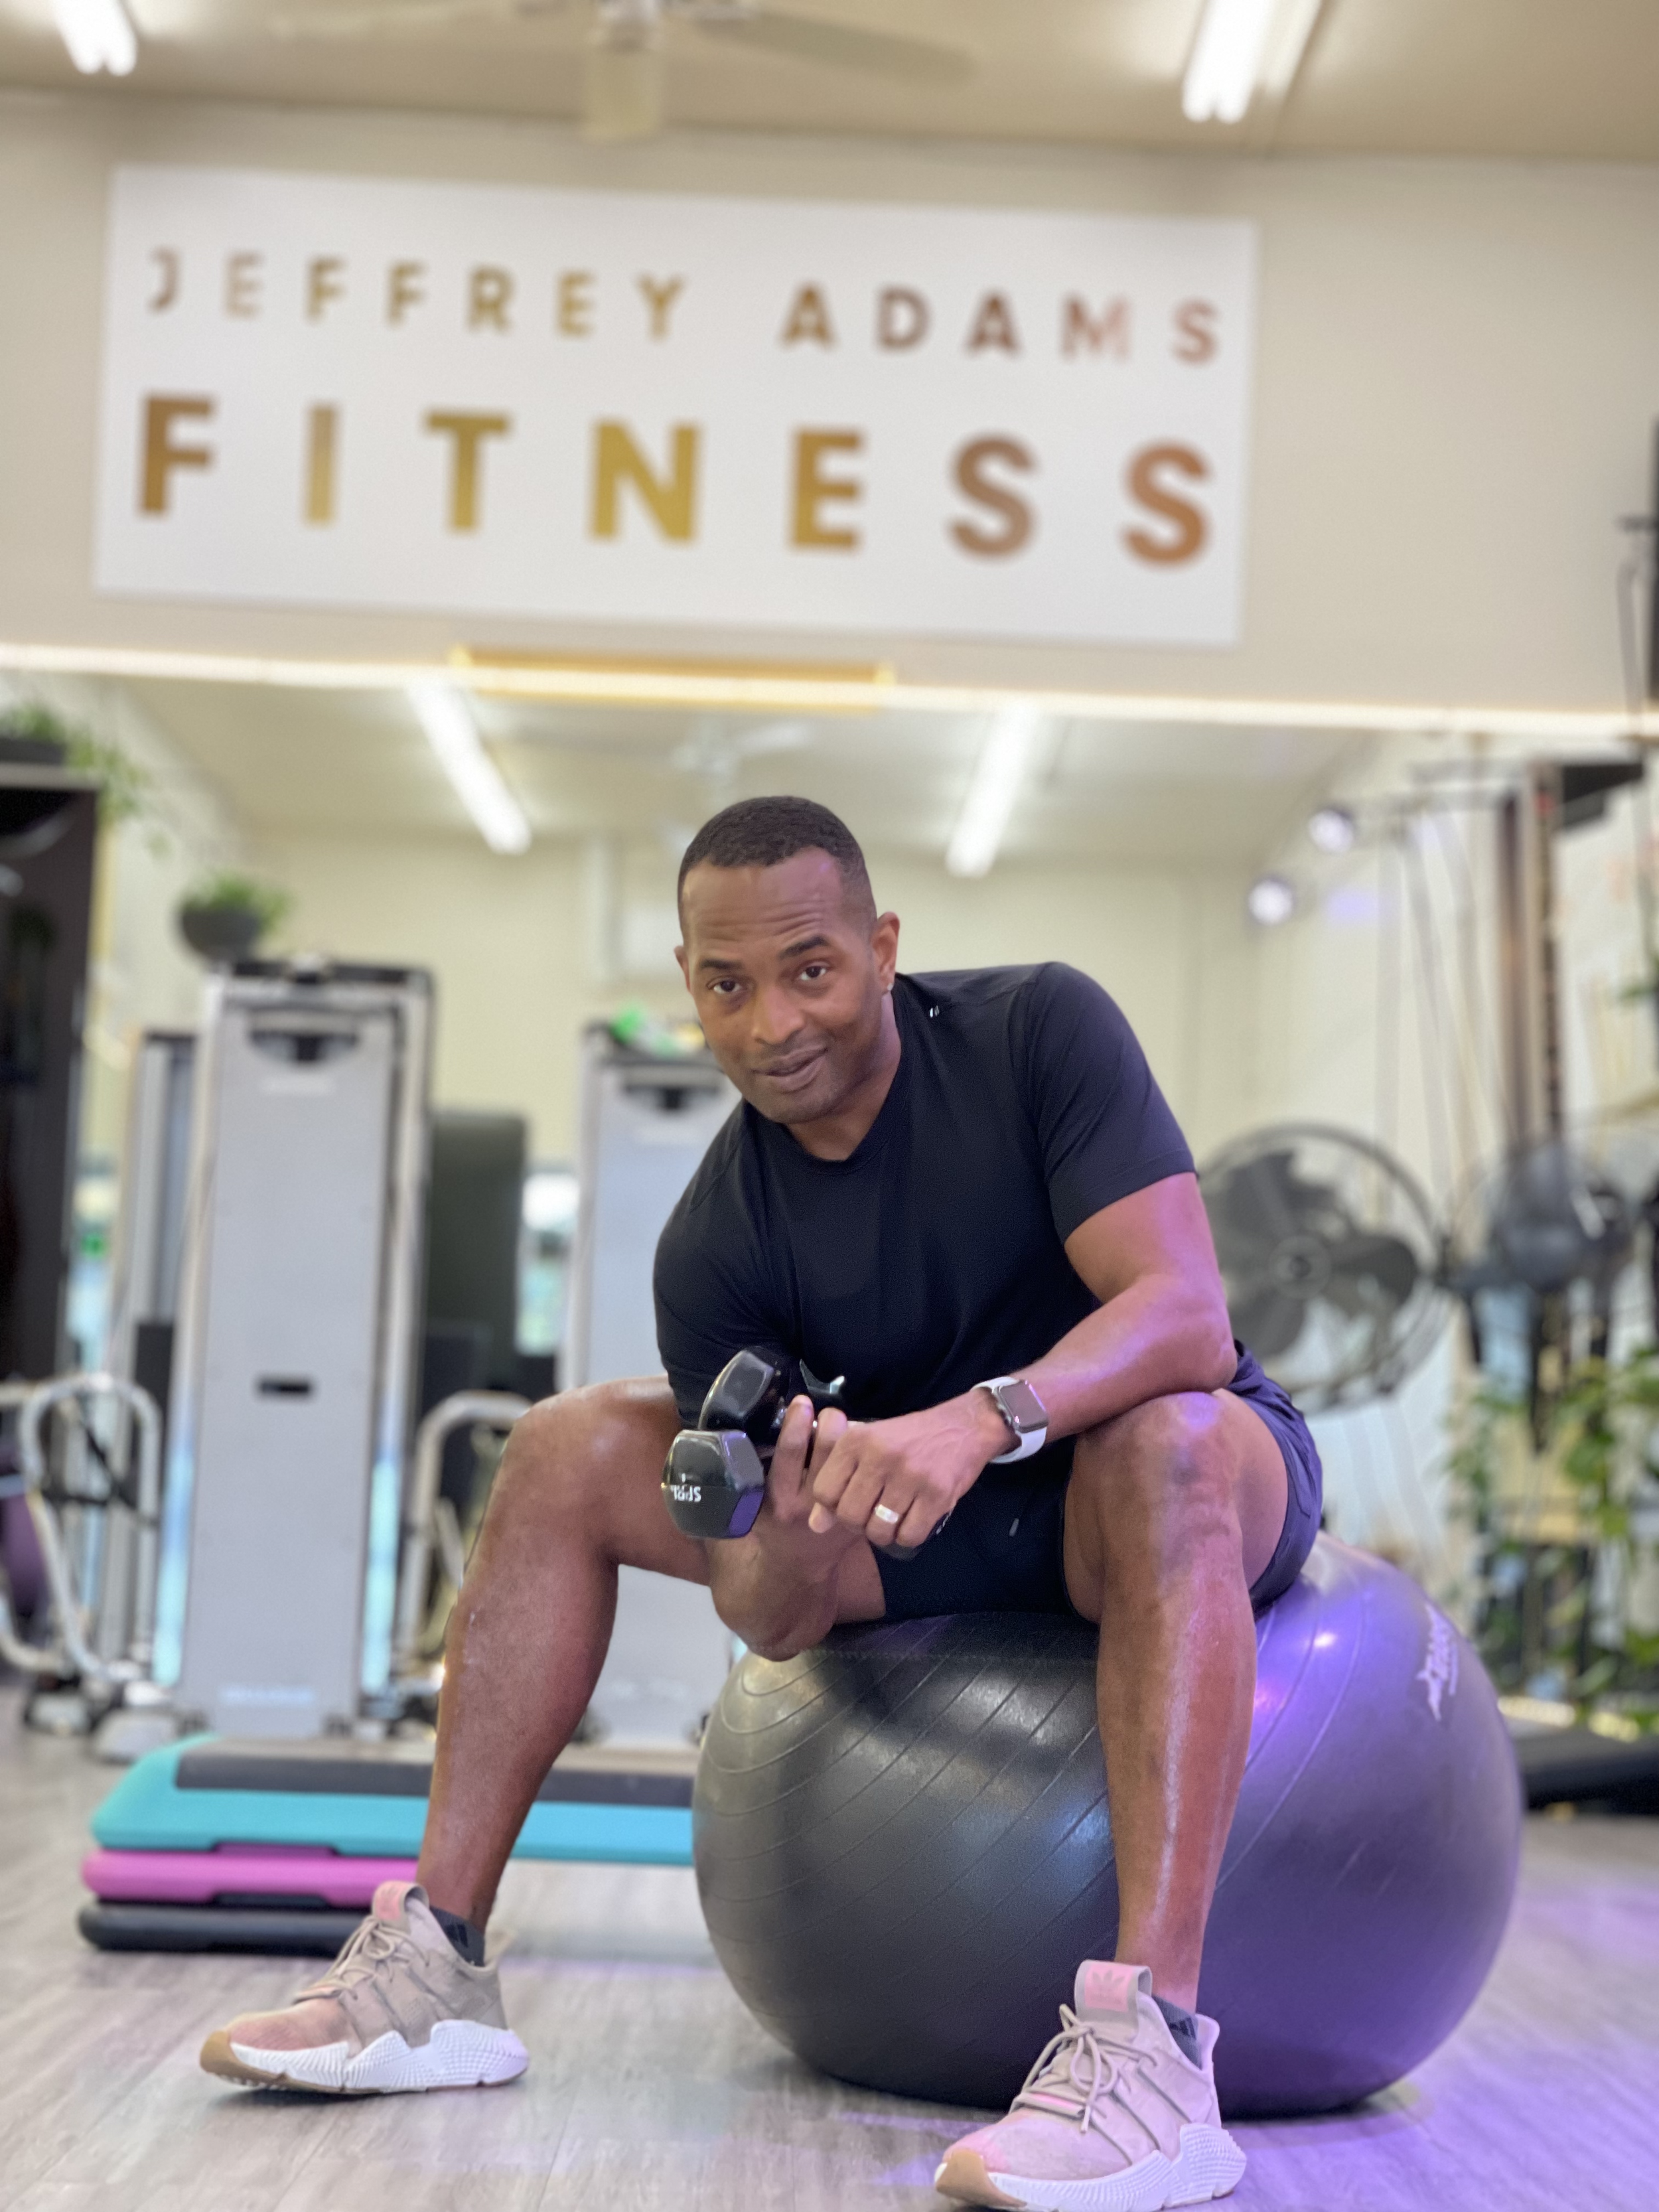 The Workouts — Jeffrey Adams Fitness